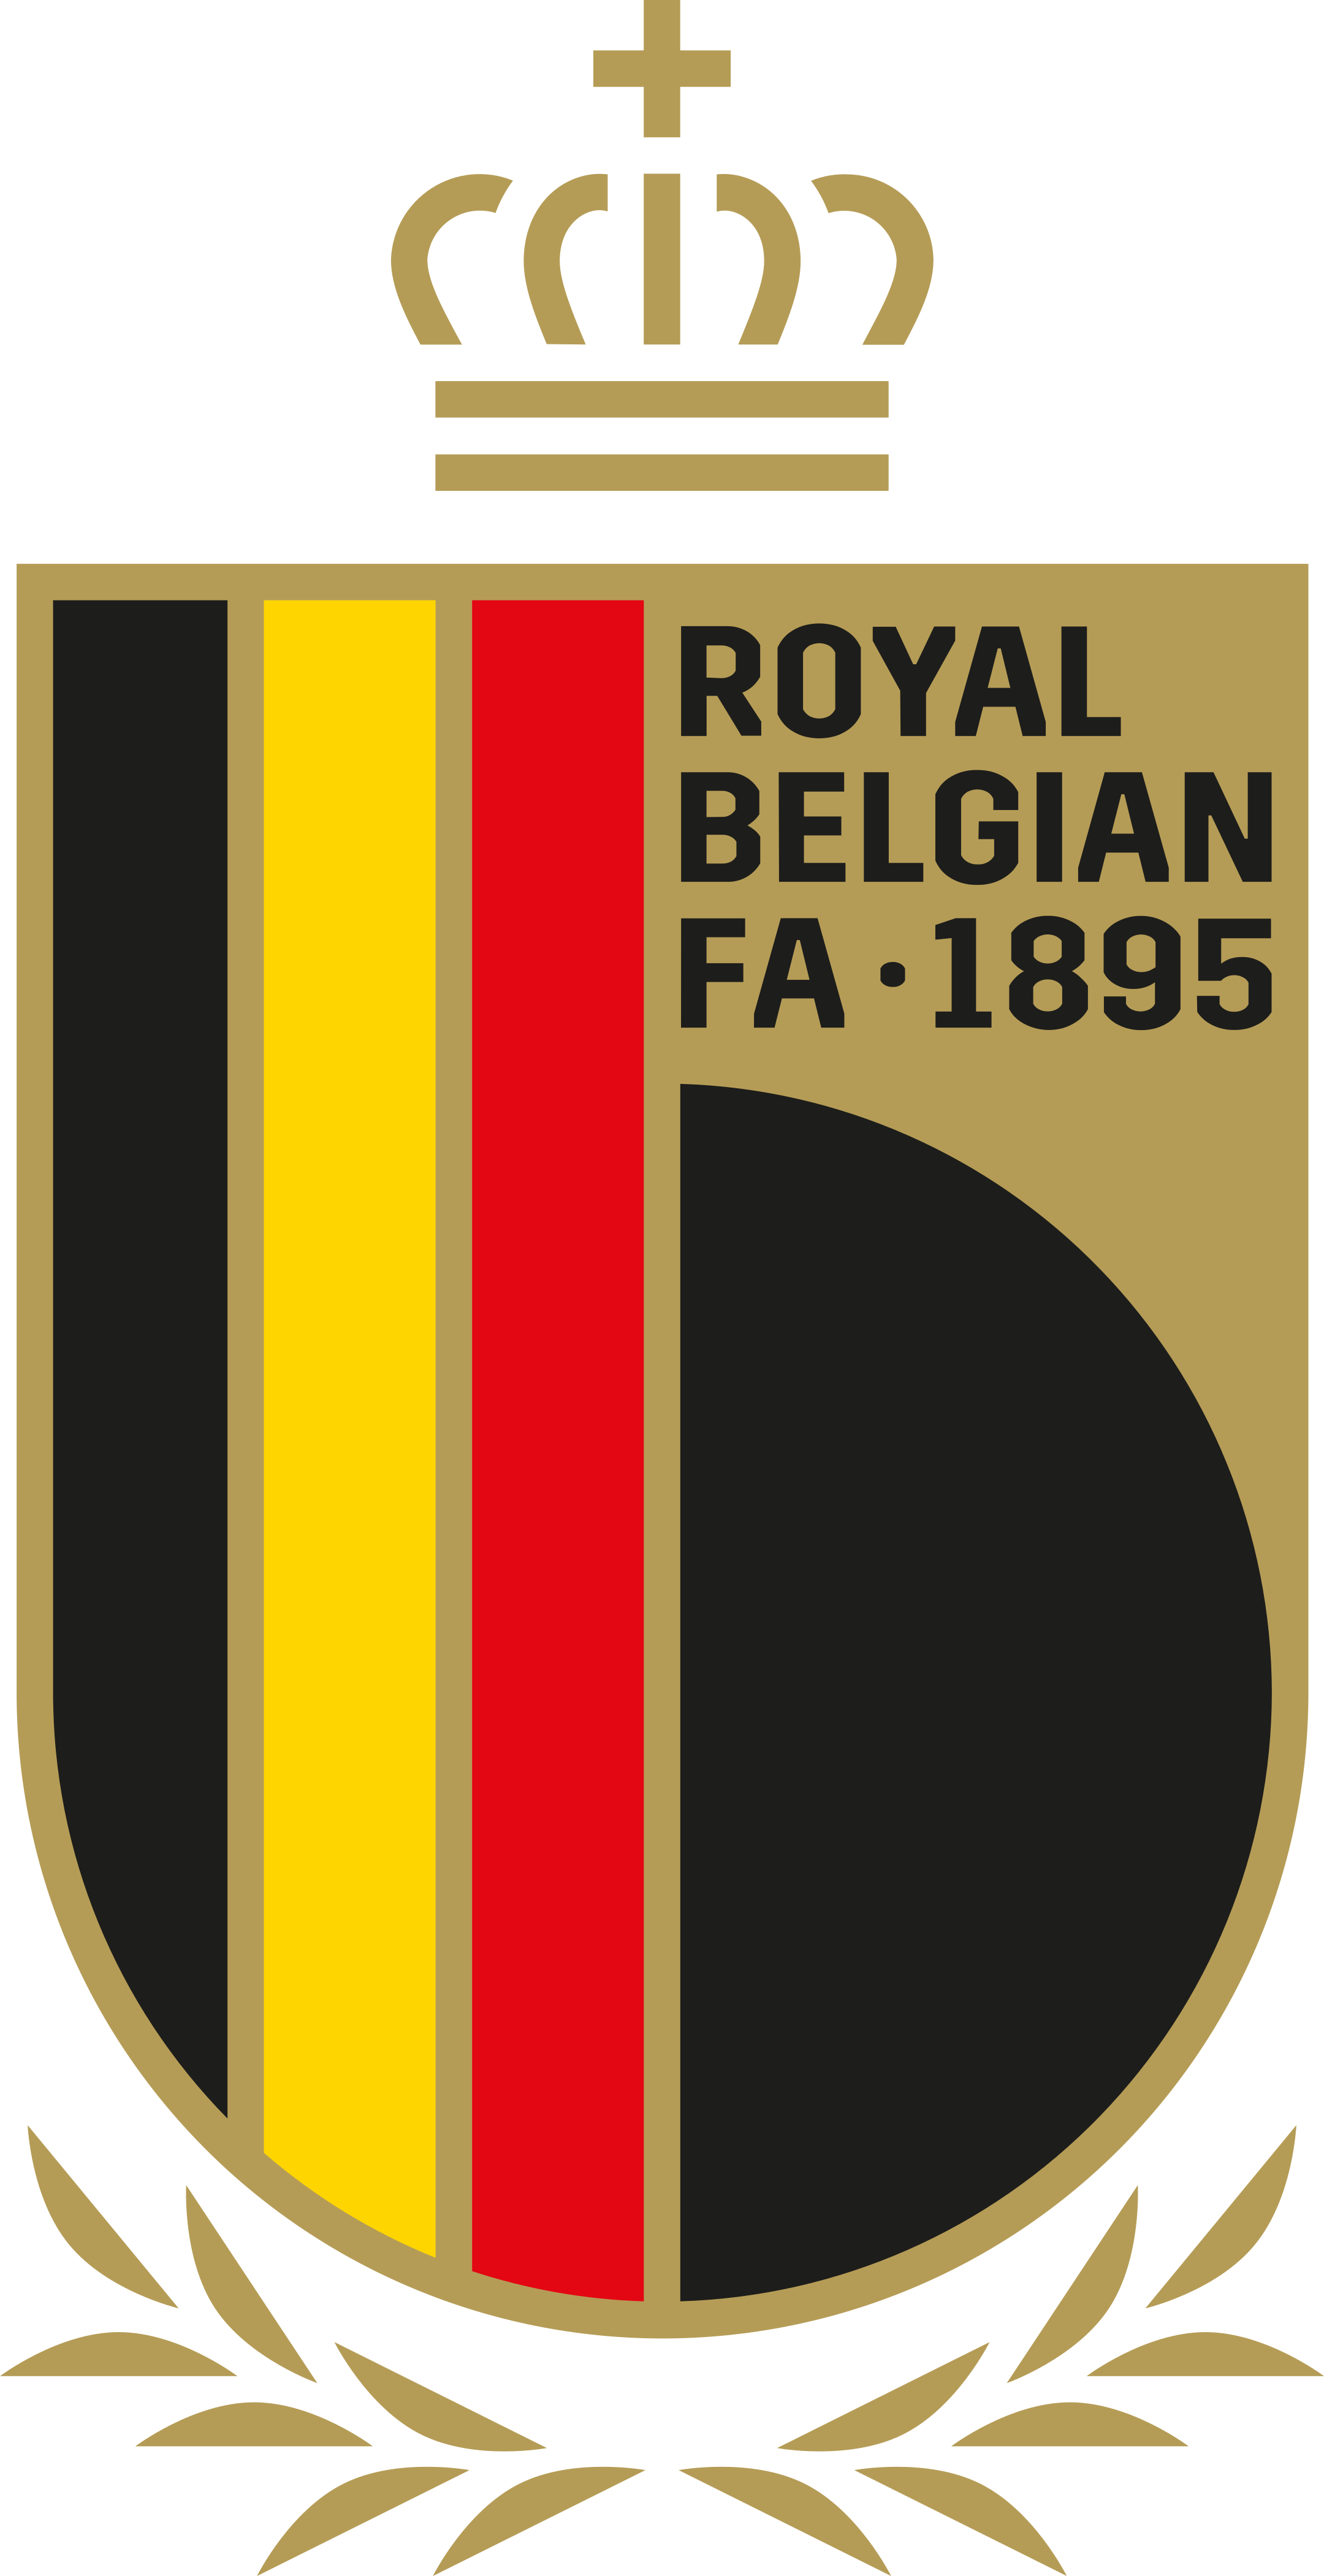 belgian national team logo 1 - Belgium National Football Team Logo